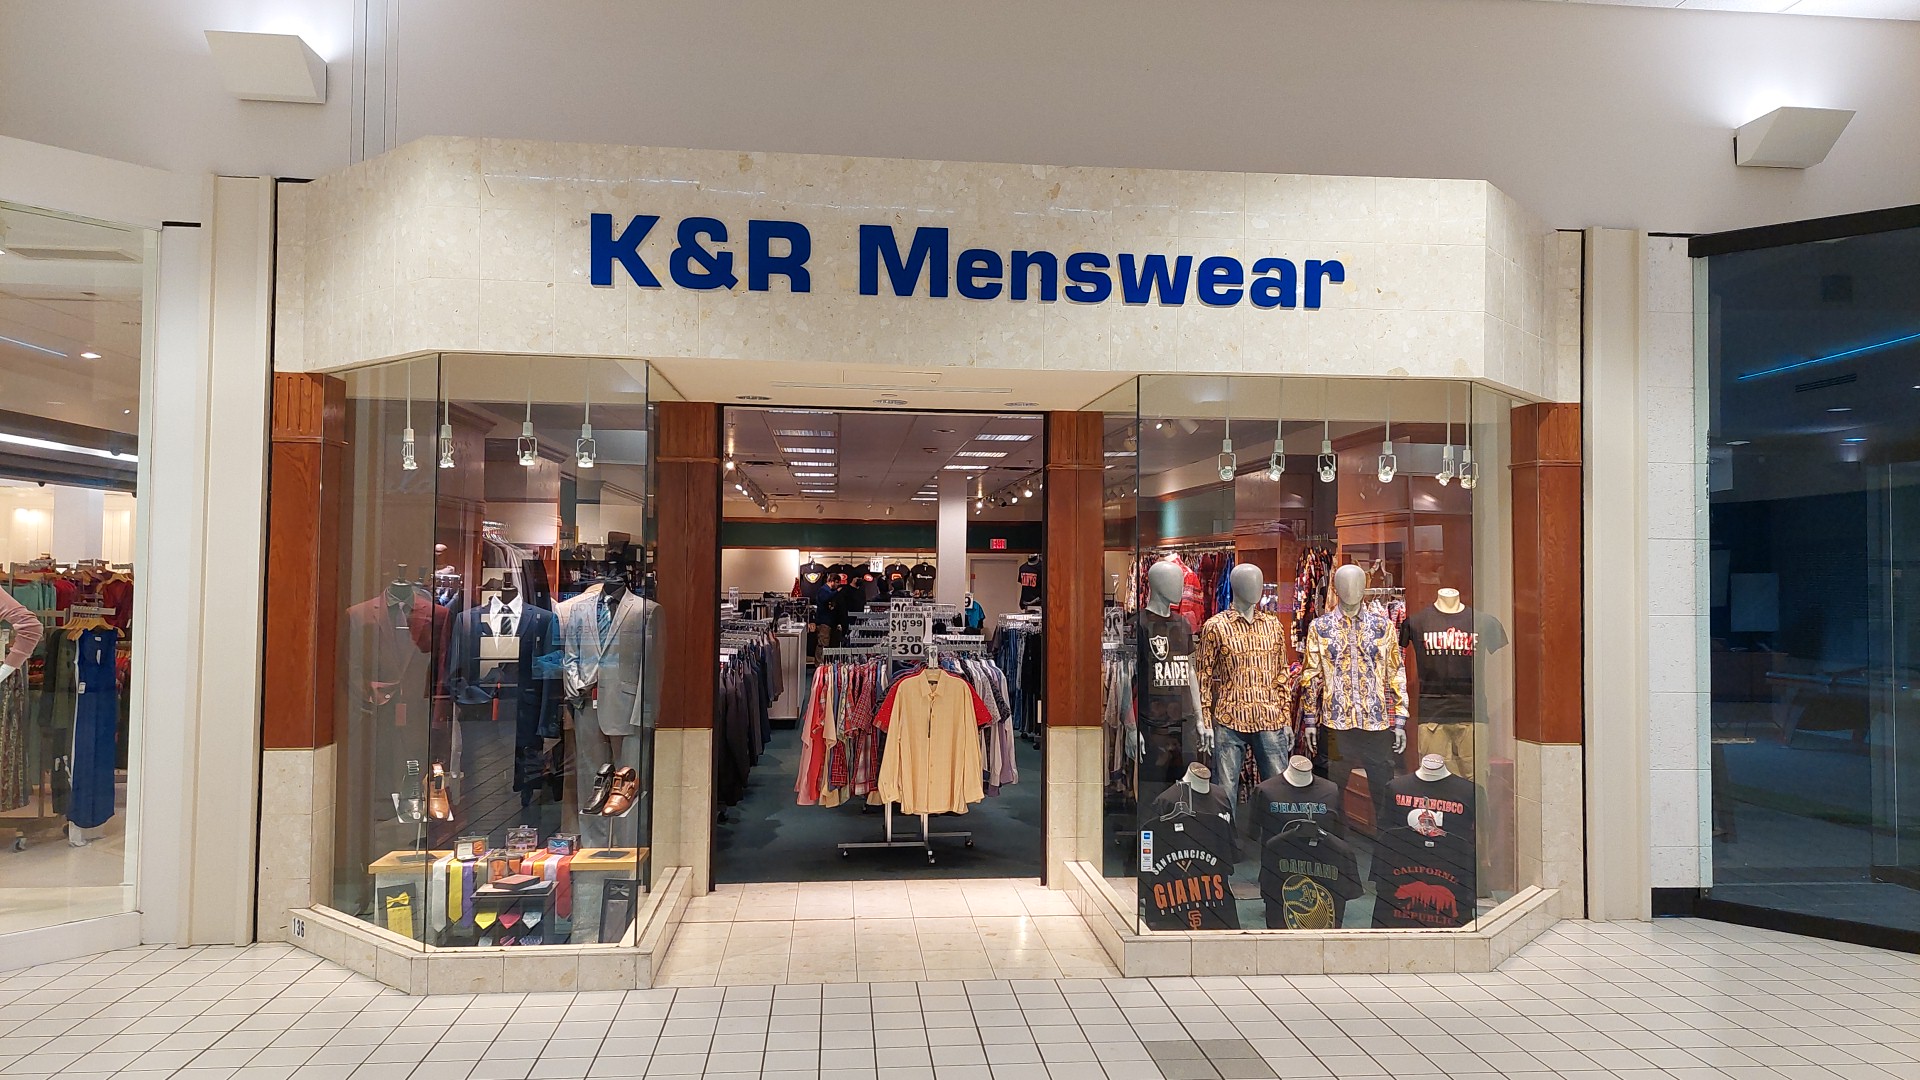 K&R Menswear